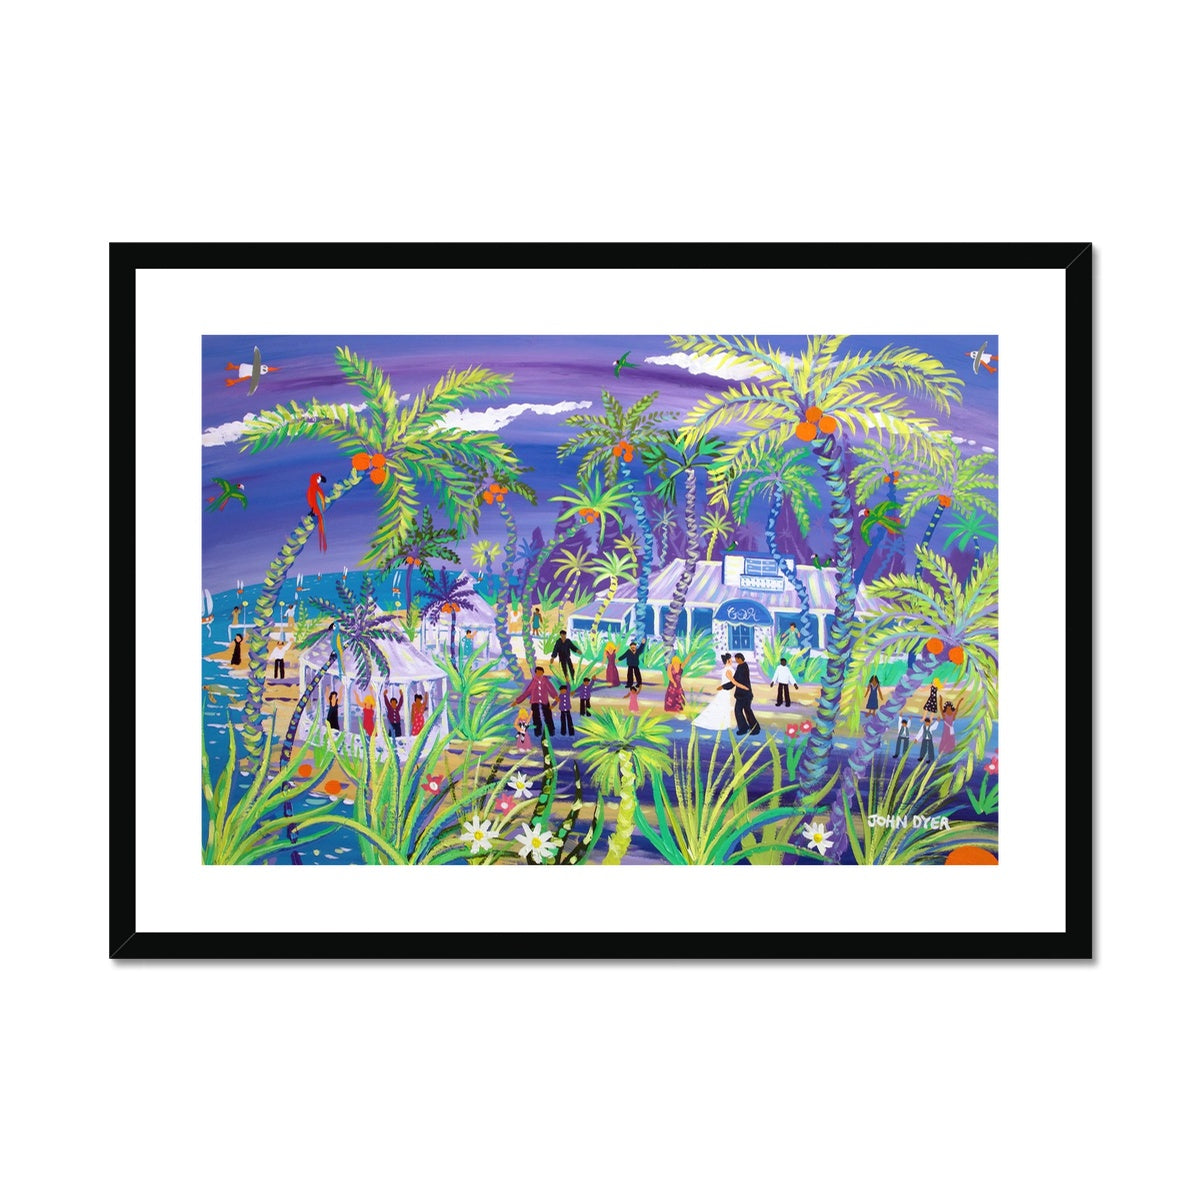 John Dyer Framed Open Edition Cornish Art Print. &#39;Caribbean Wedding at the Grand Old House, Cayman Islands&#39;. Caribbean Art Gallery